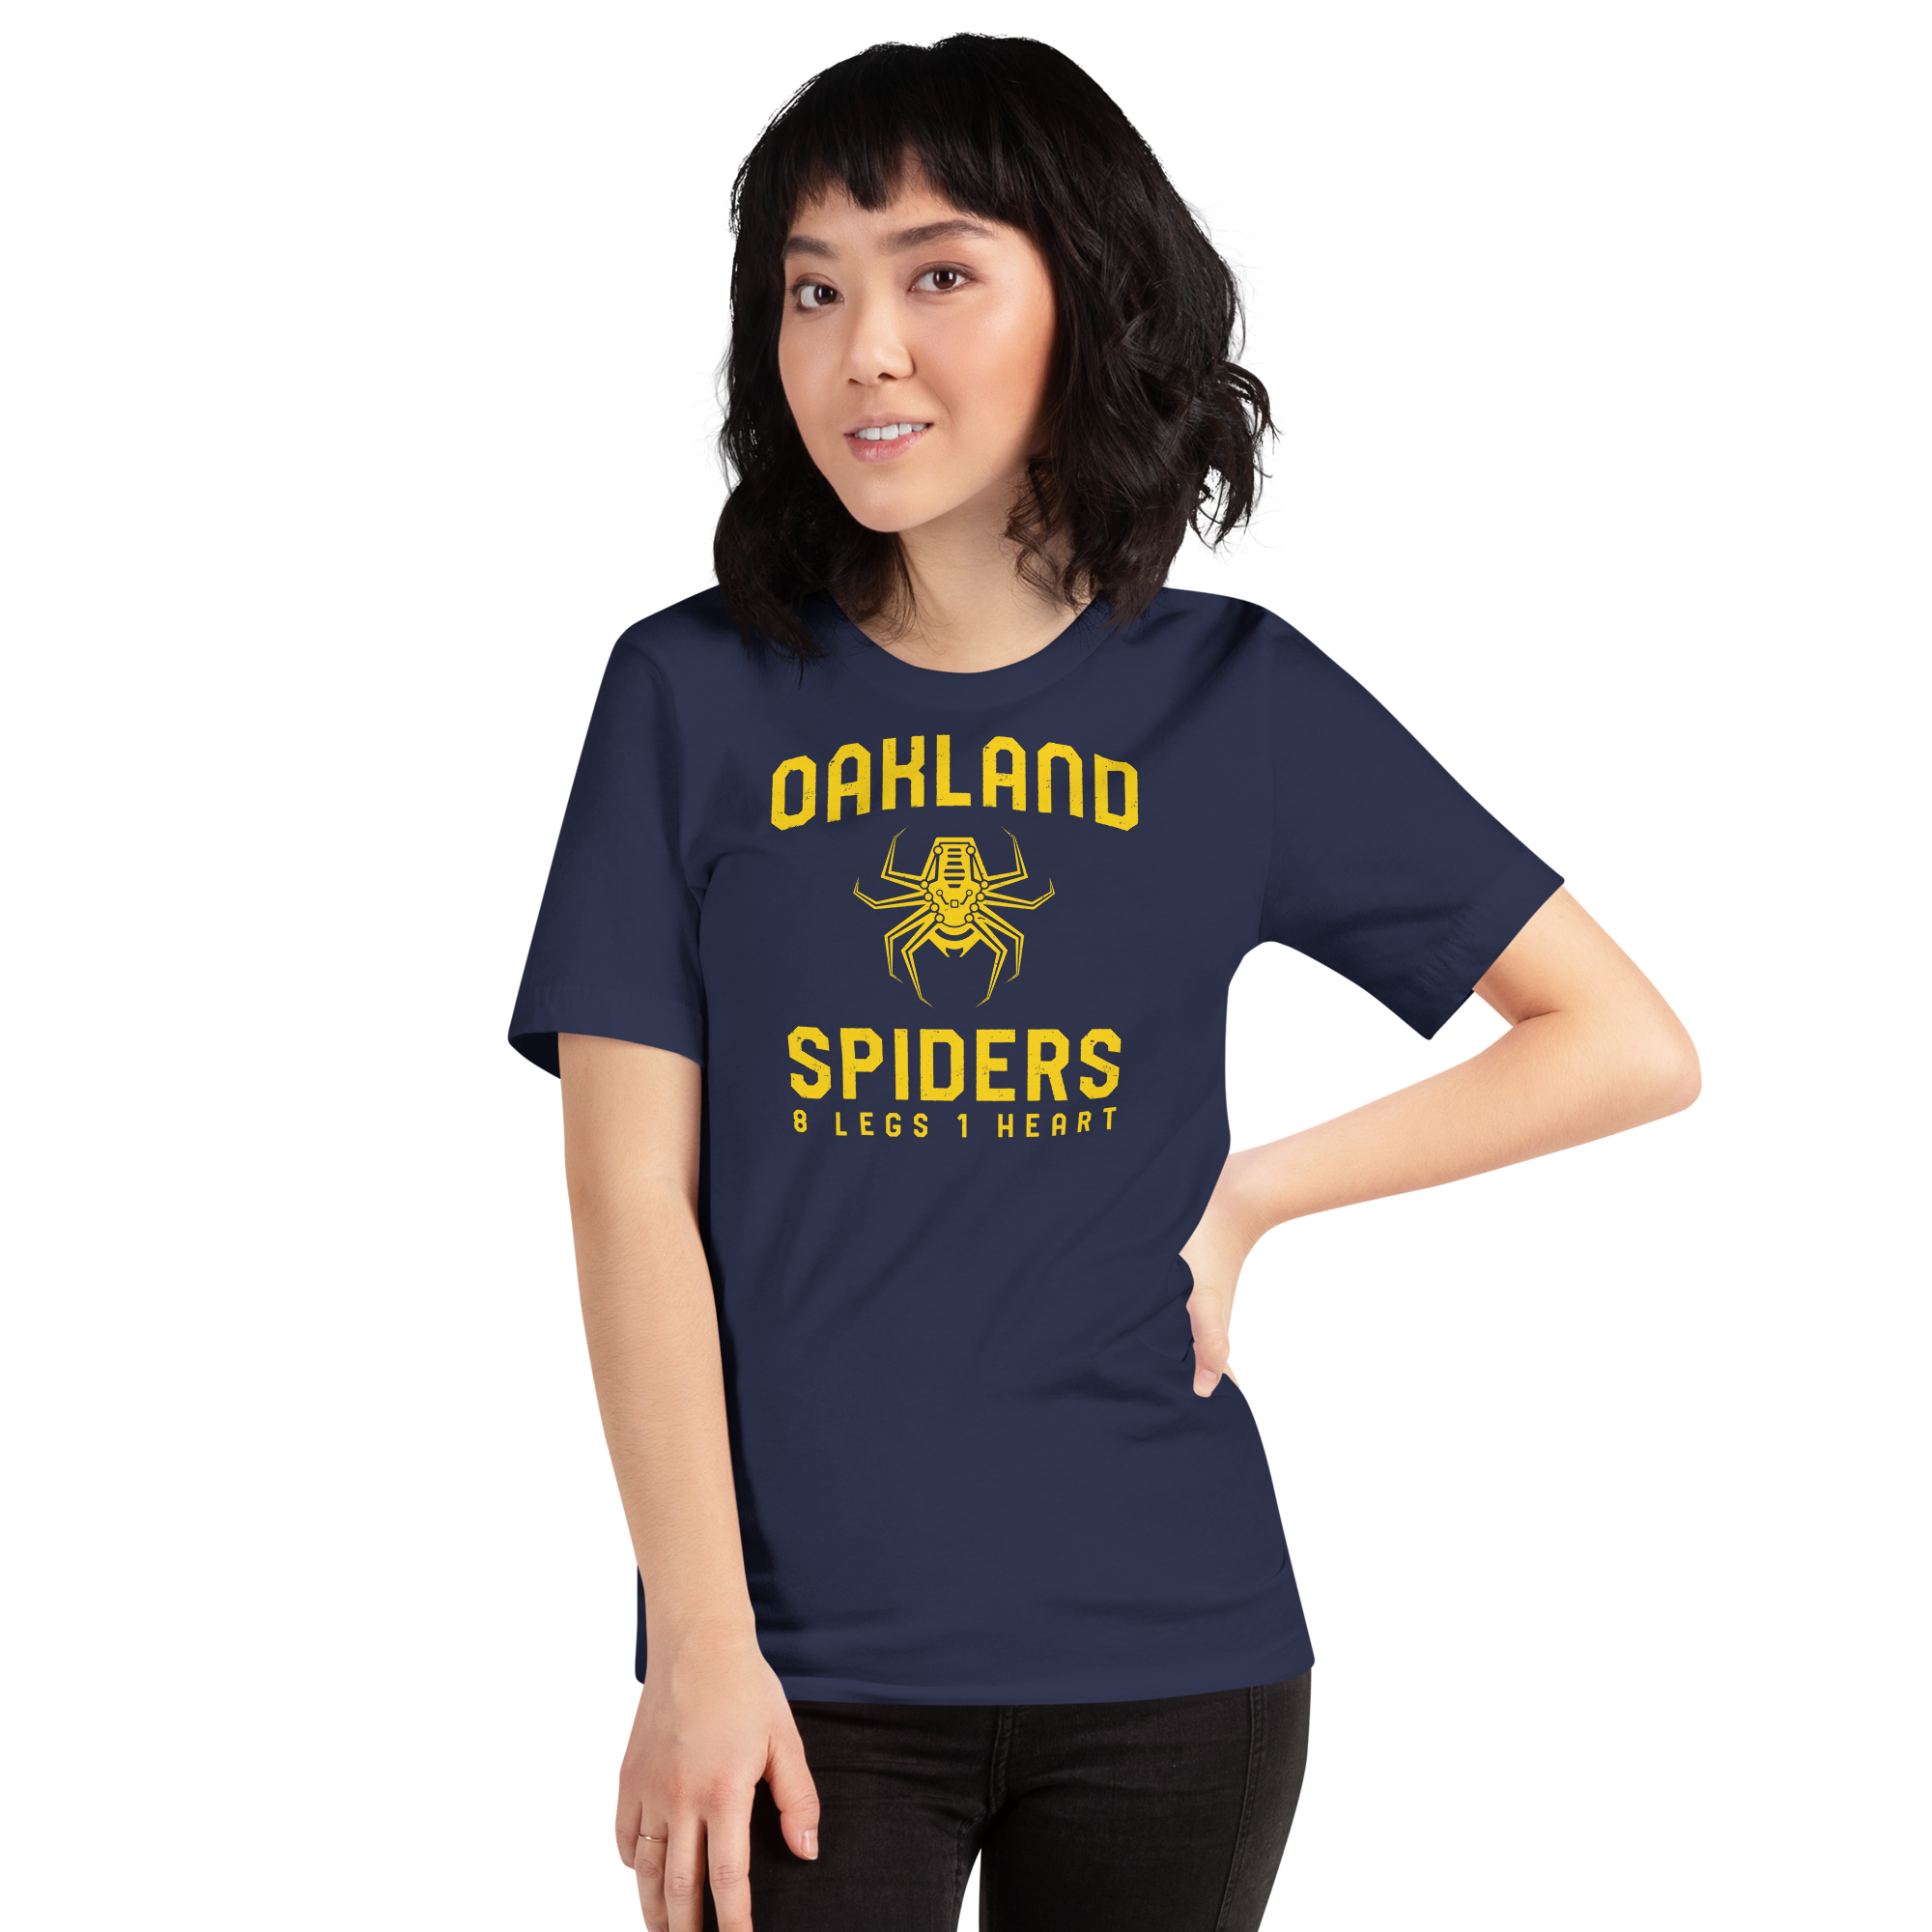 Oakland Spiders Tee- Yellow Print